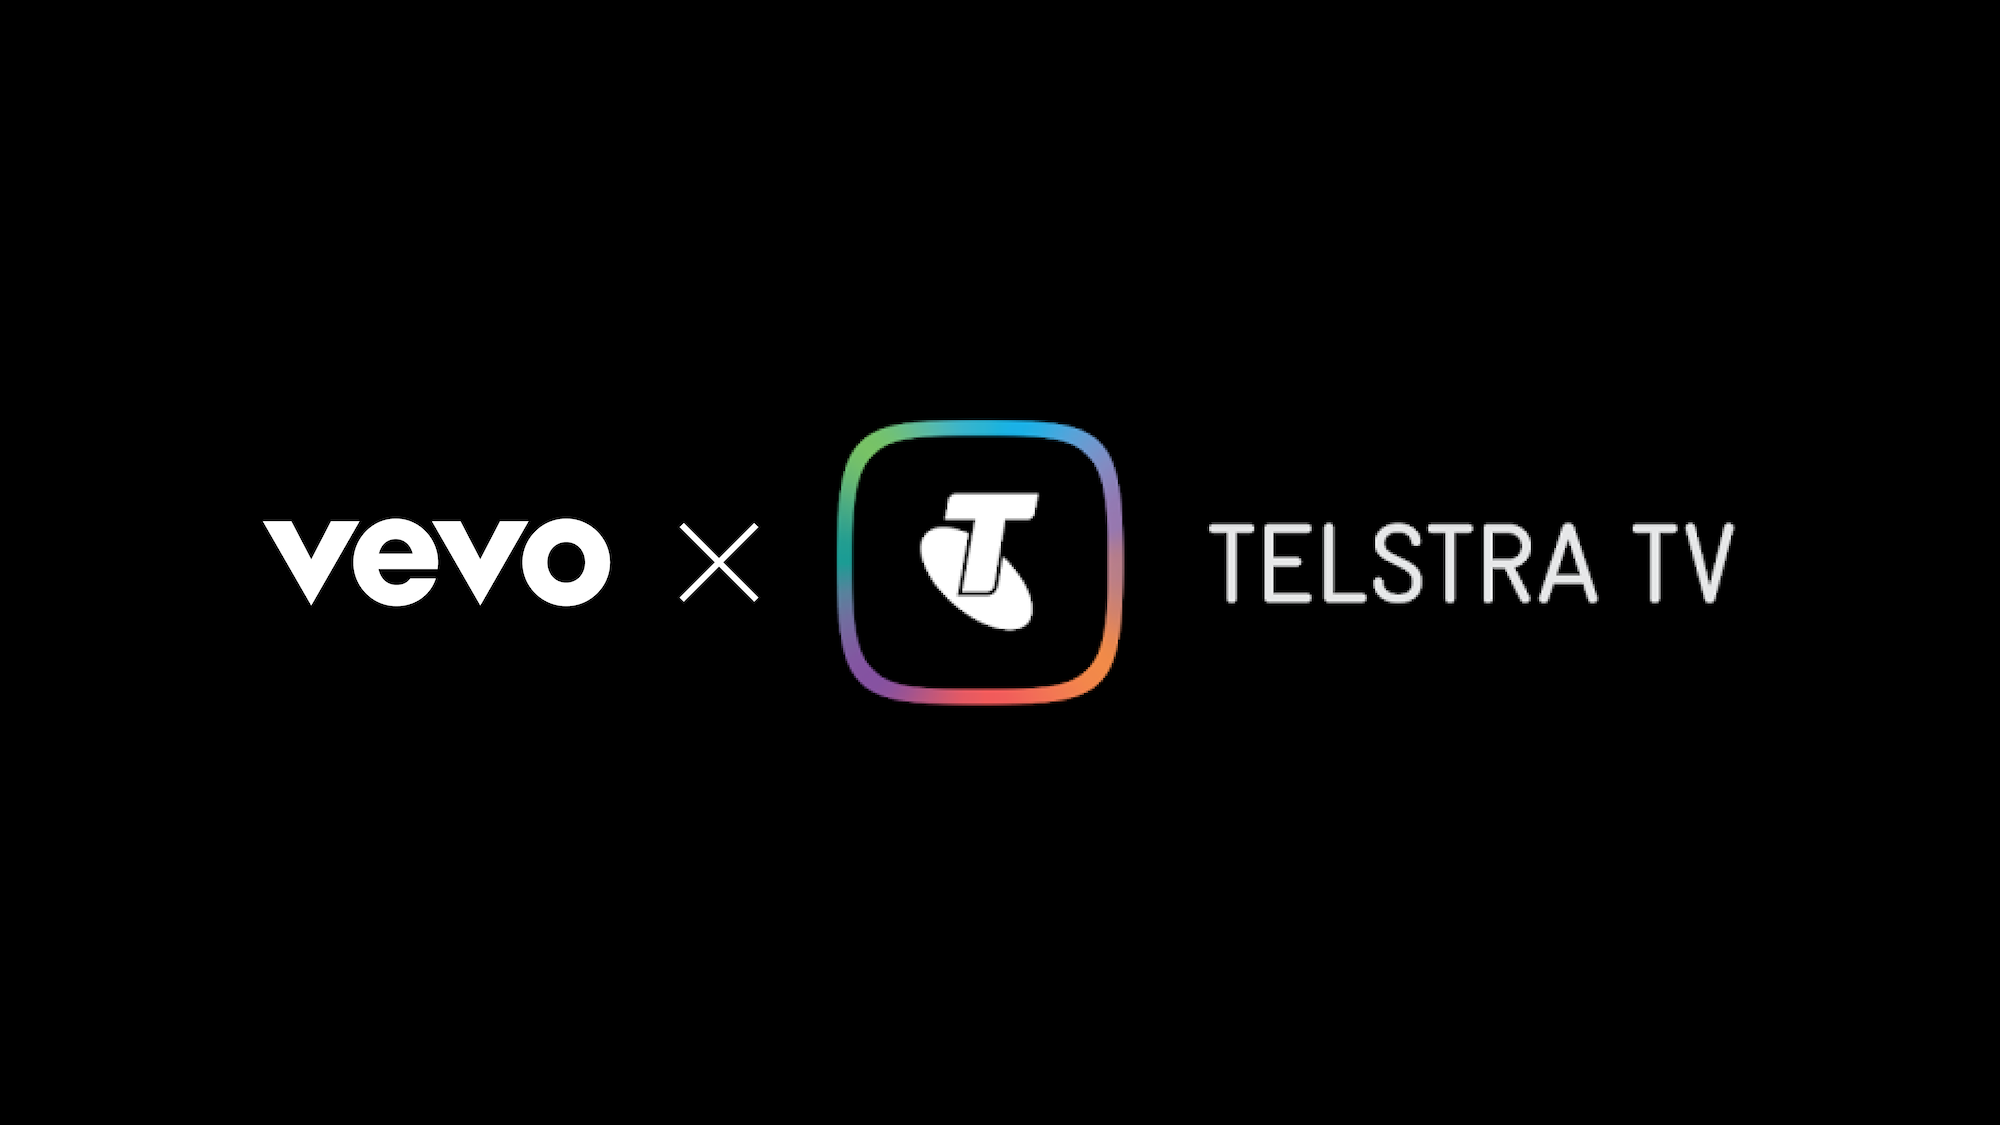 Vevo announces partnership to bring music videos to Telstra TV